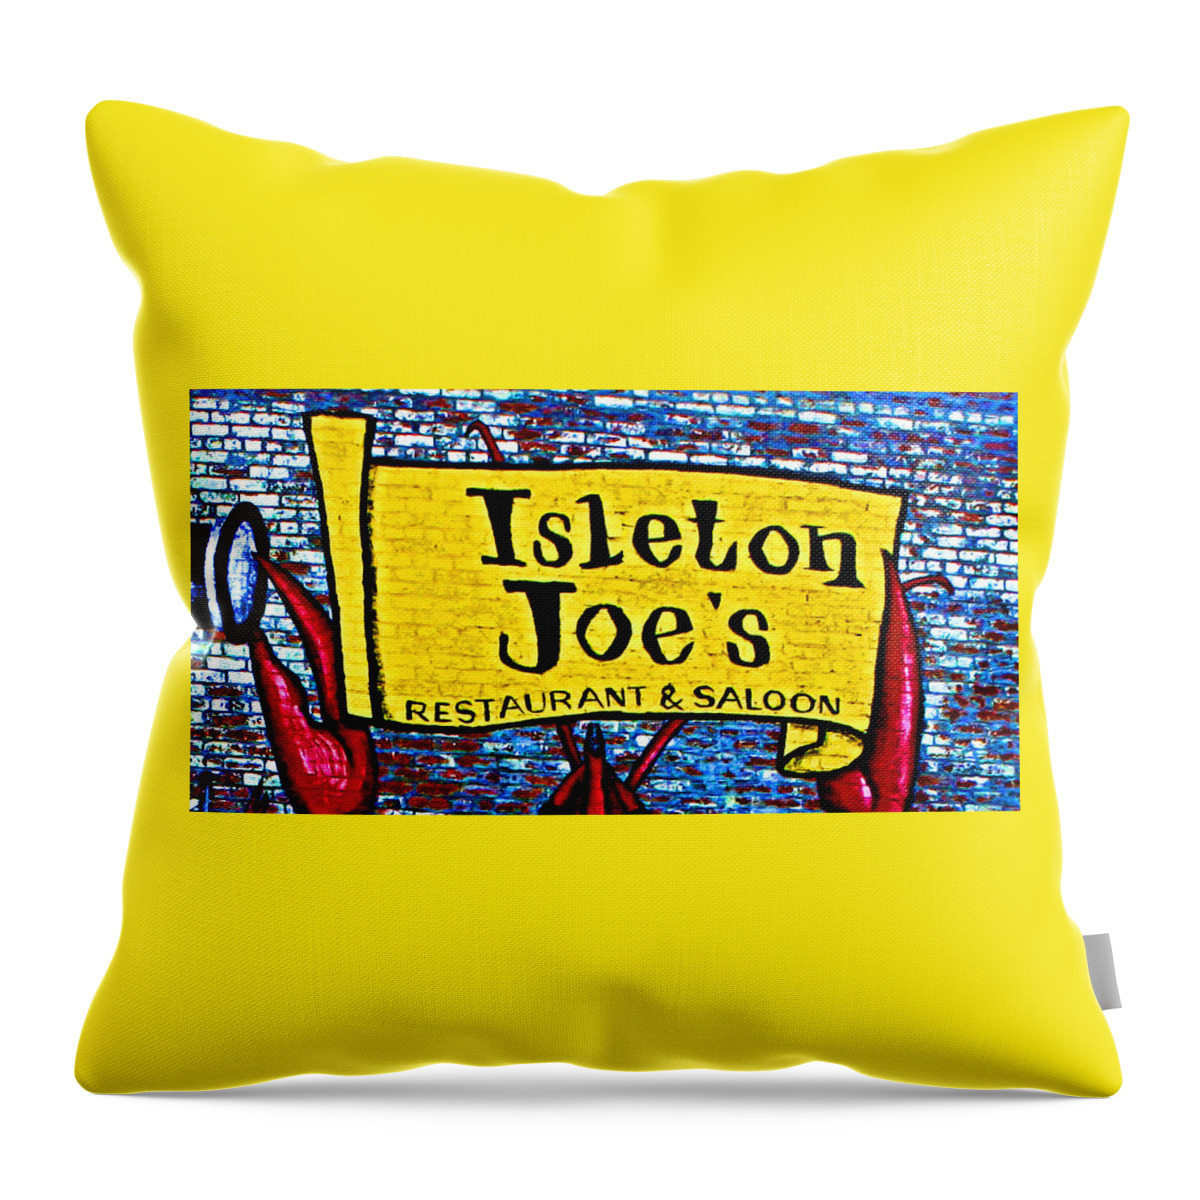 Isleton Joe's Restaurant & Saloon Throw Pillow featuring the photograph Isleton Joe's Logo by Joseph Coulombe